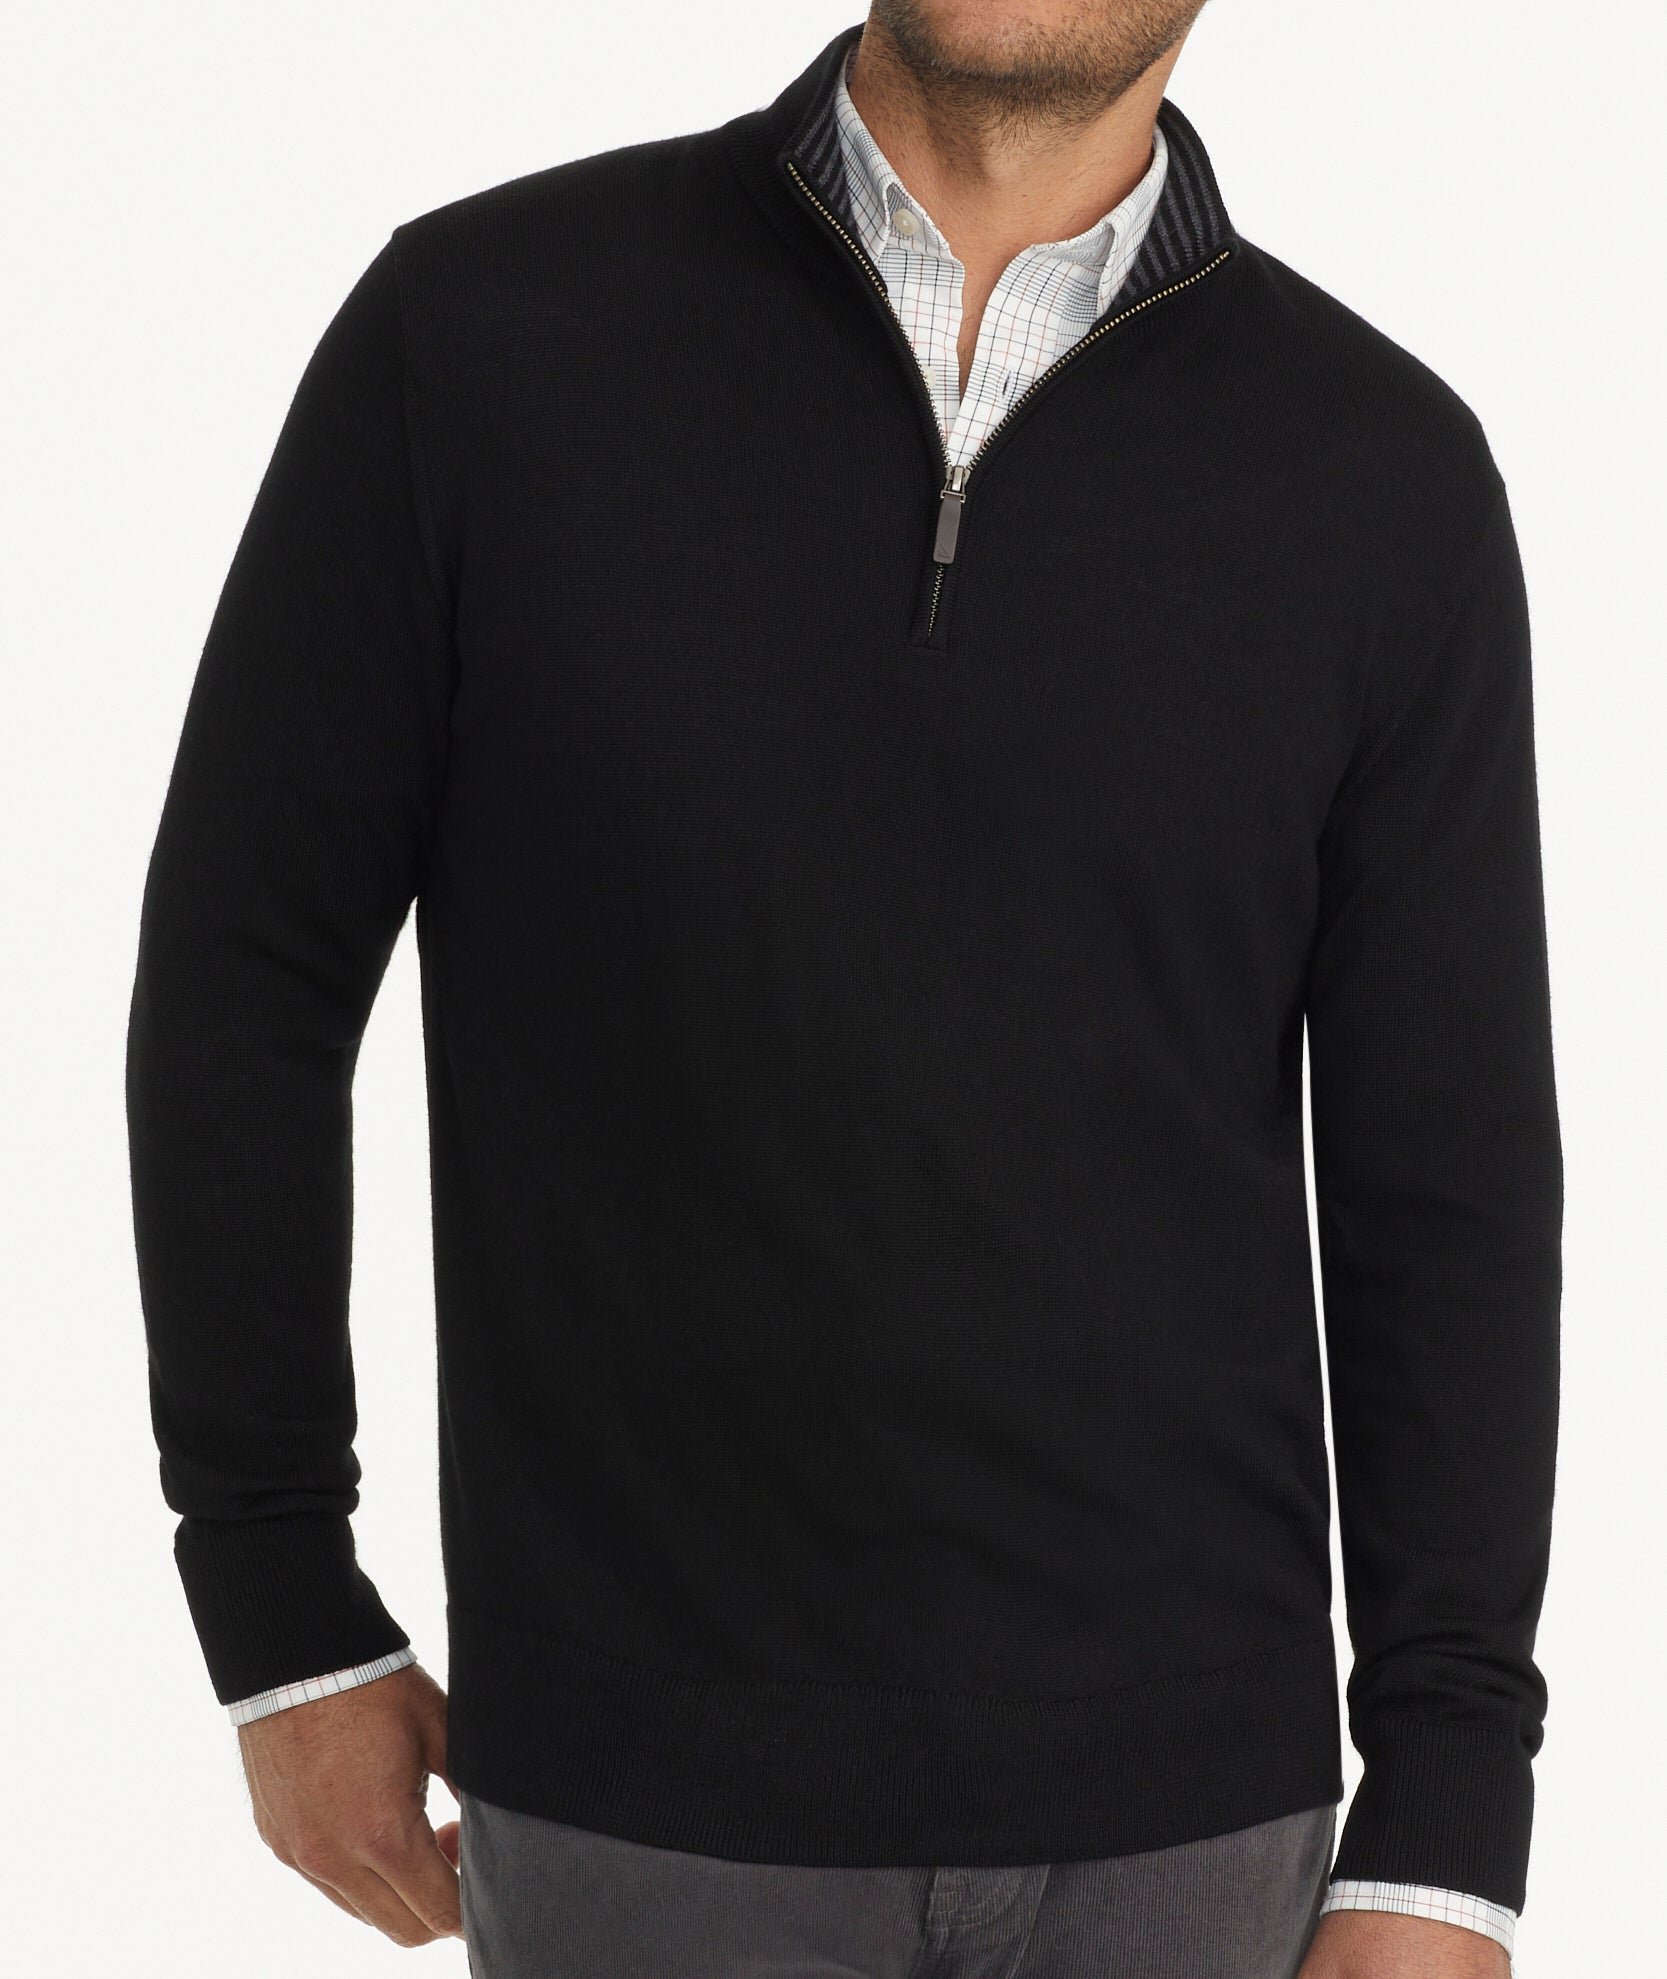 NWT Private Label Men's Quarter Zip Merino Wool Sweater 100158358MN S Black  - Sweaters